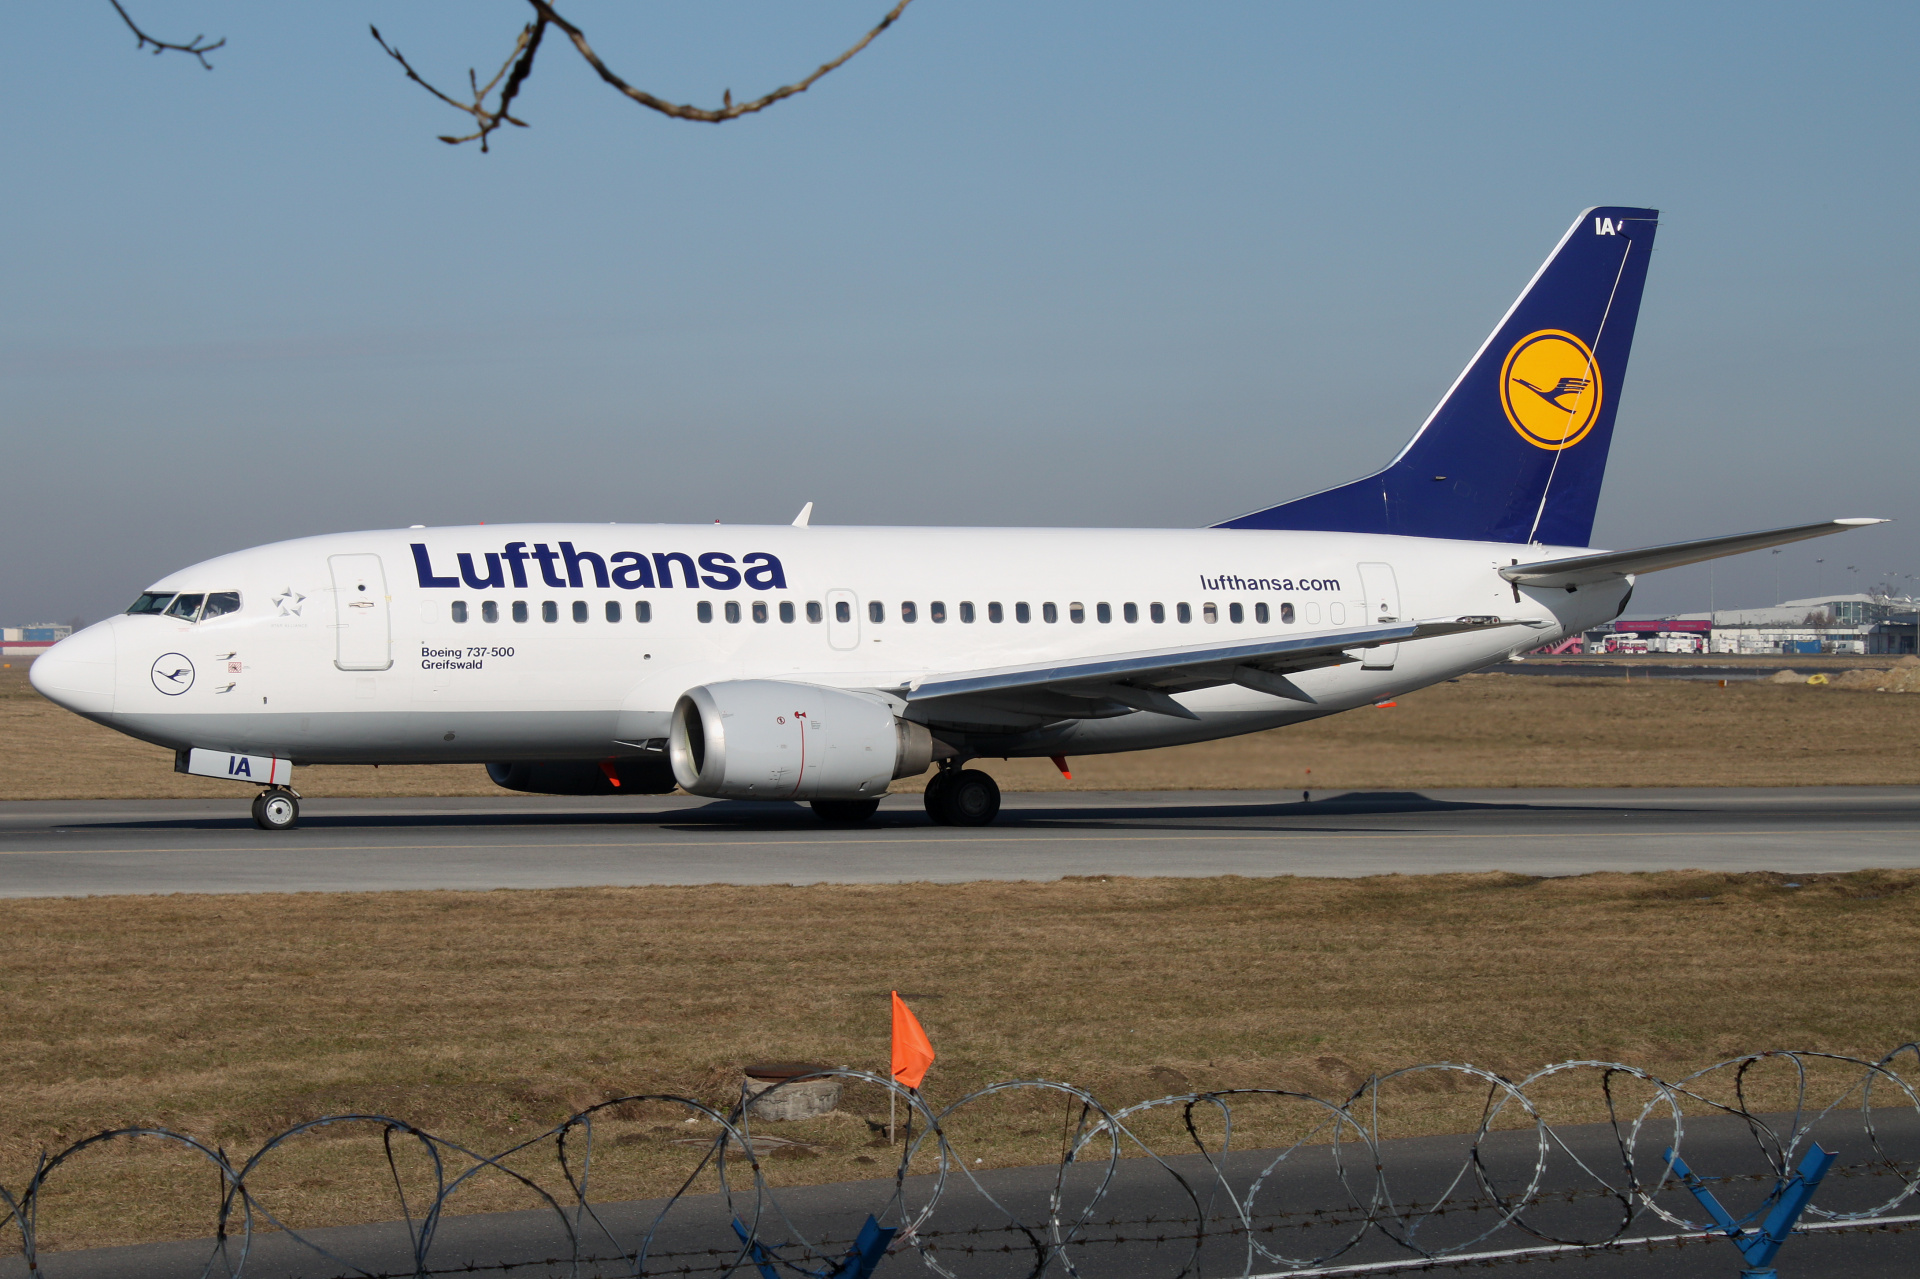 D-ABIA (Aircraft » EPWA Spotting » Boeing 737-500 » Lufthansa)